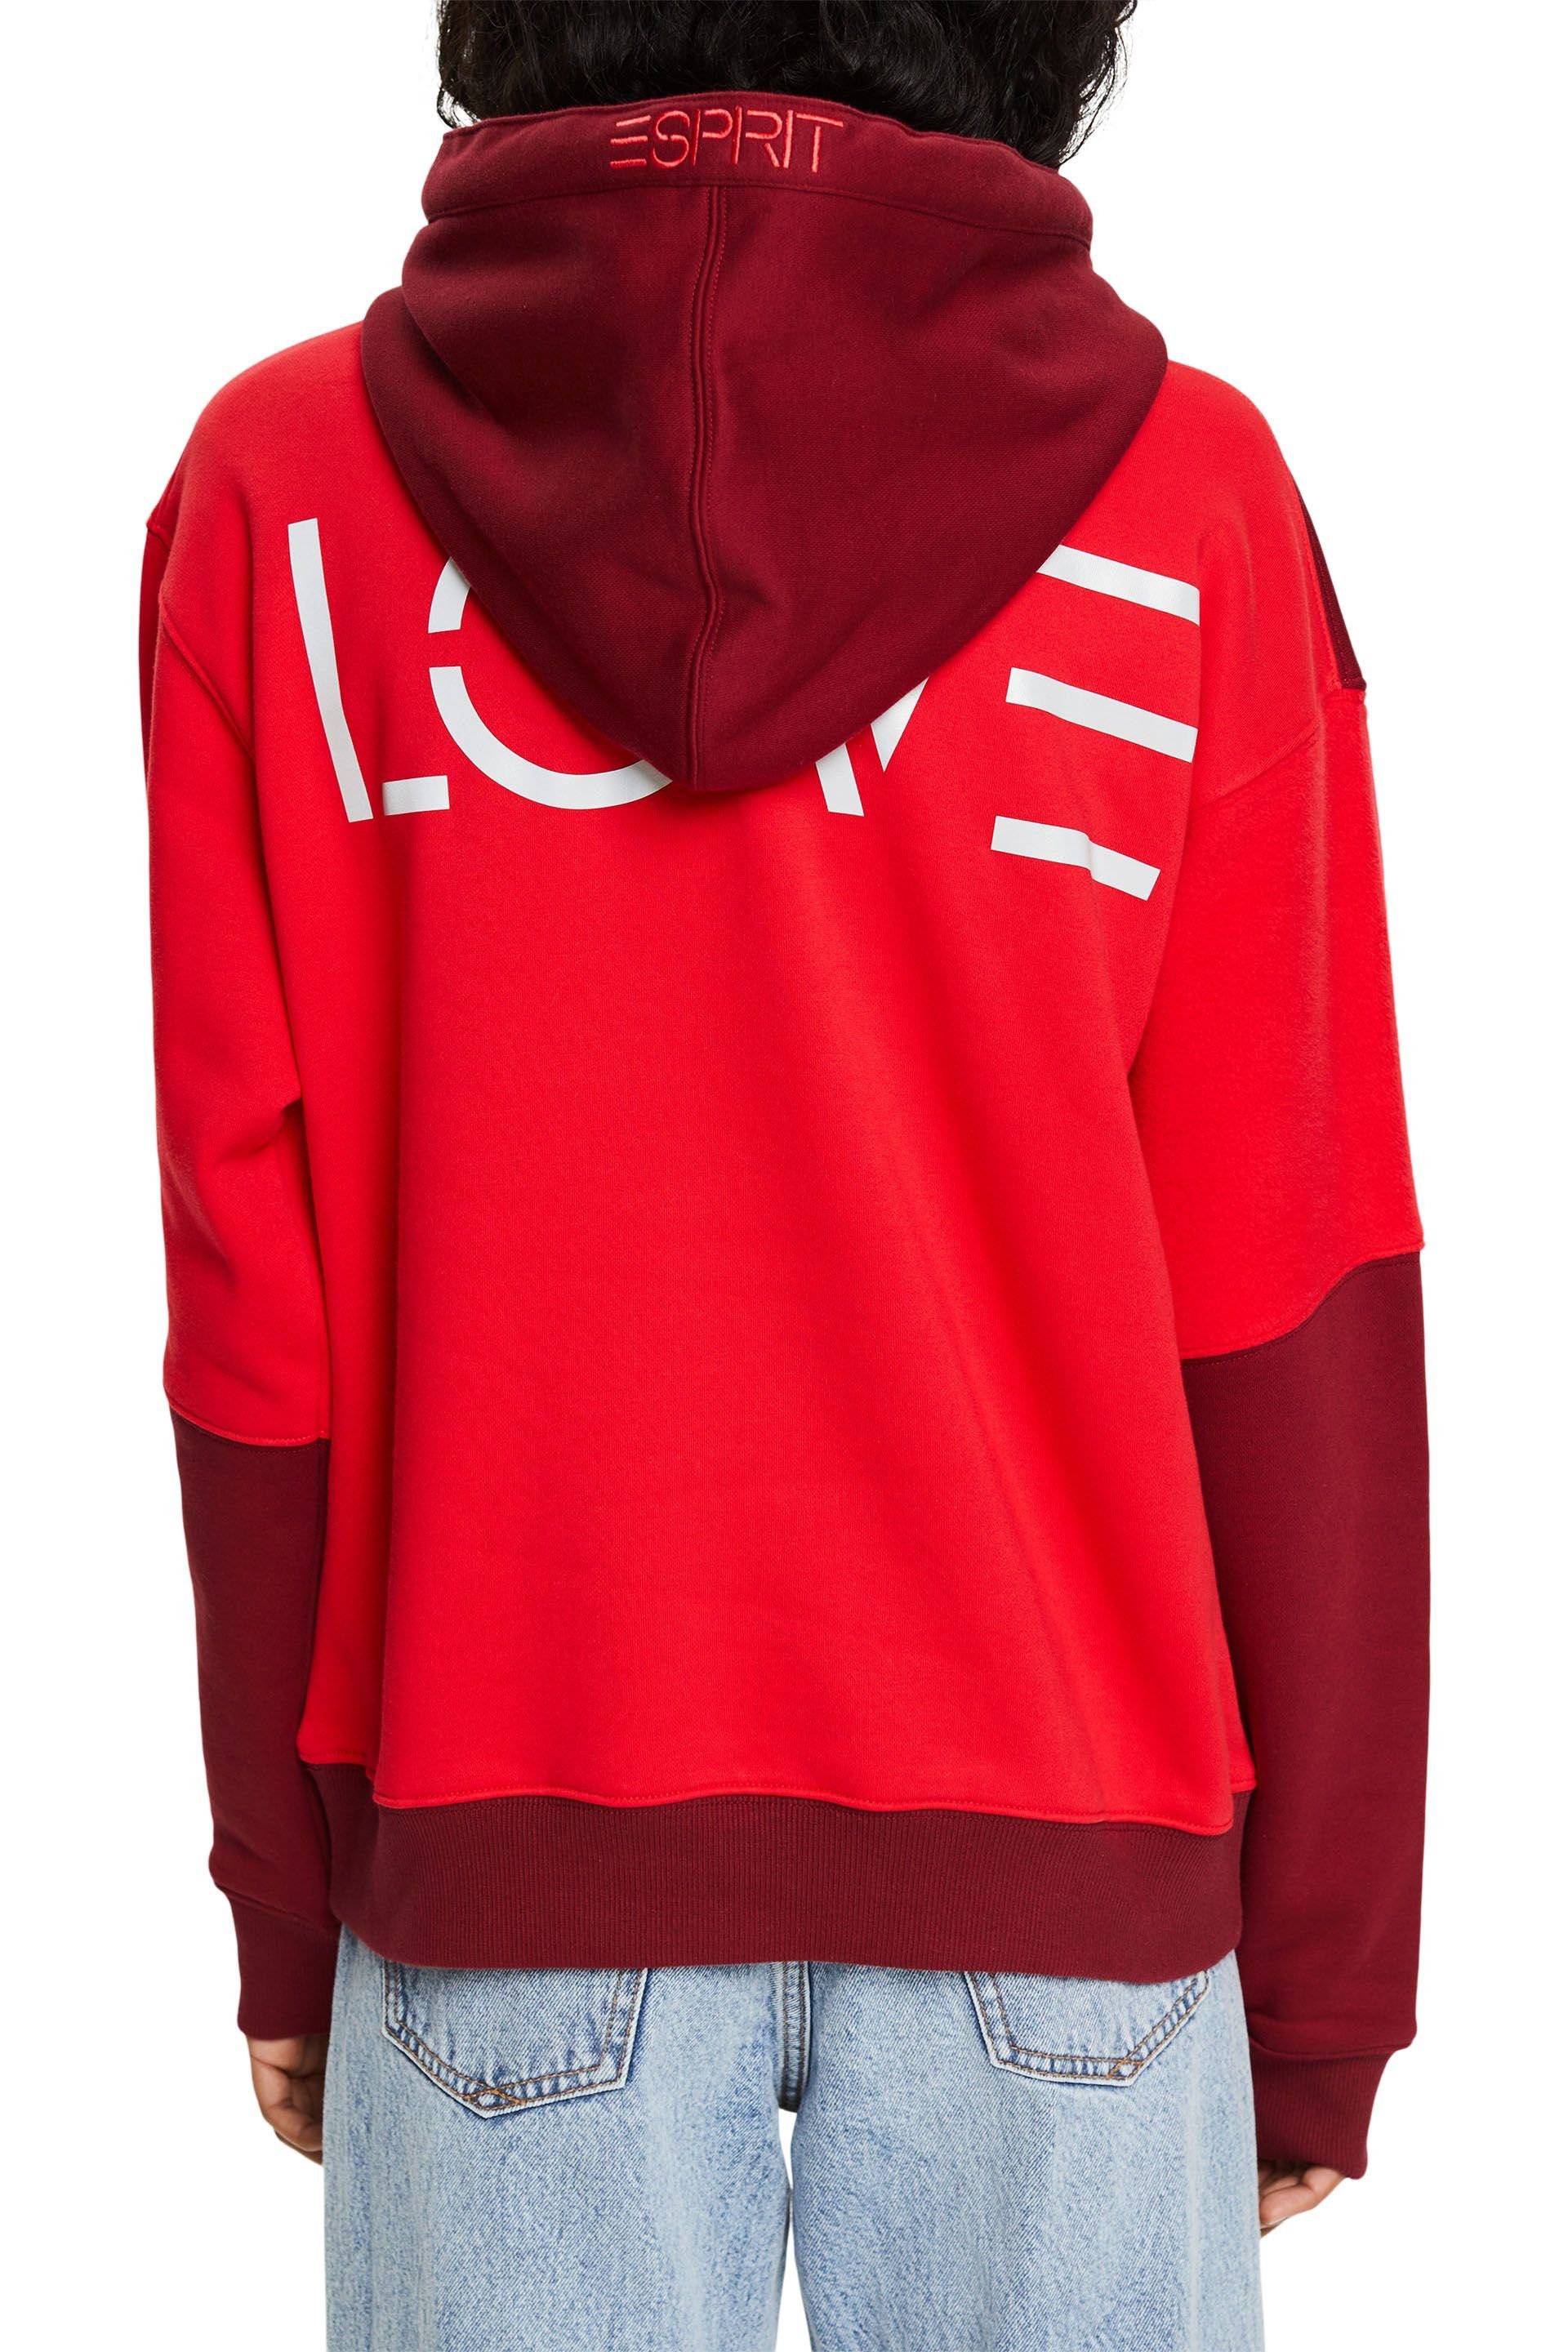 red Esprit Sweatshirt